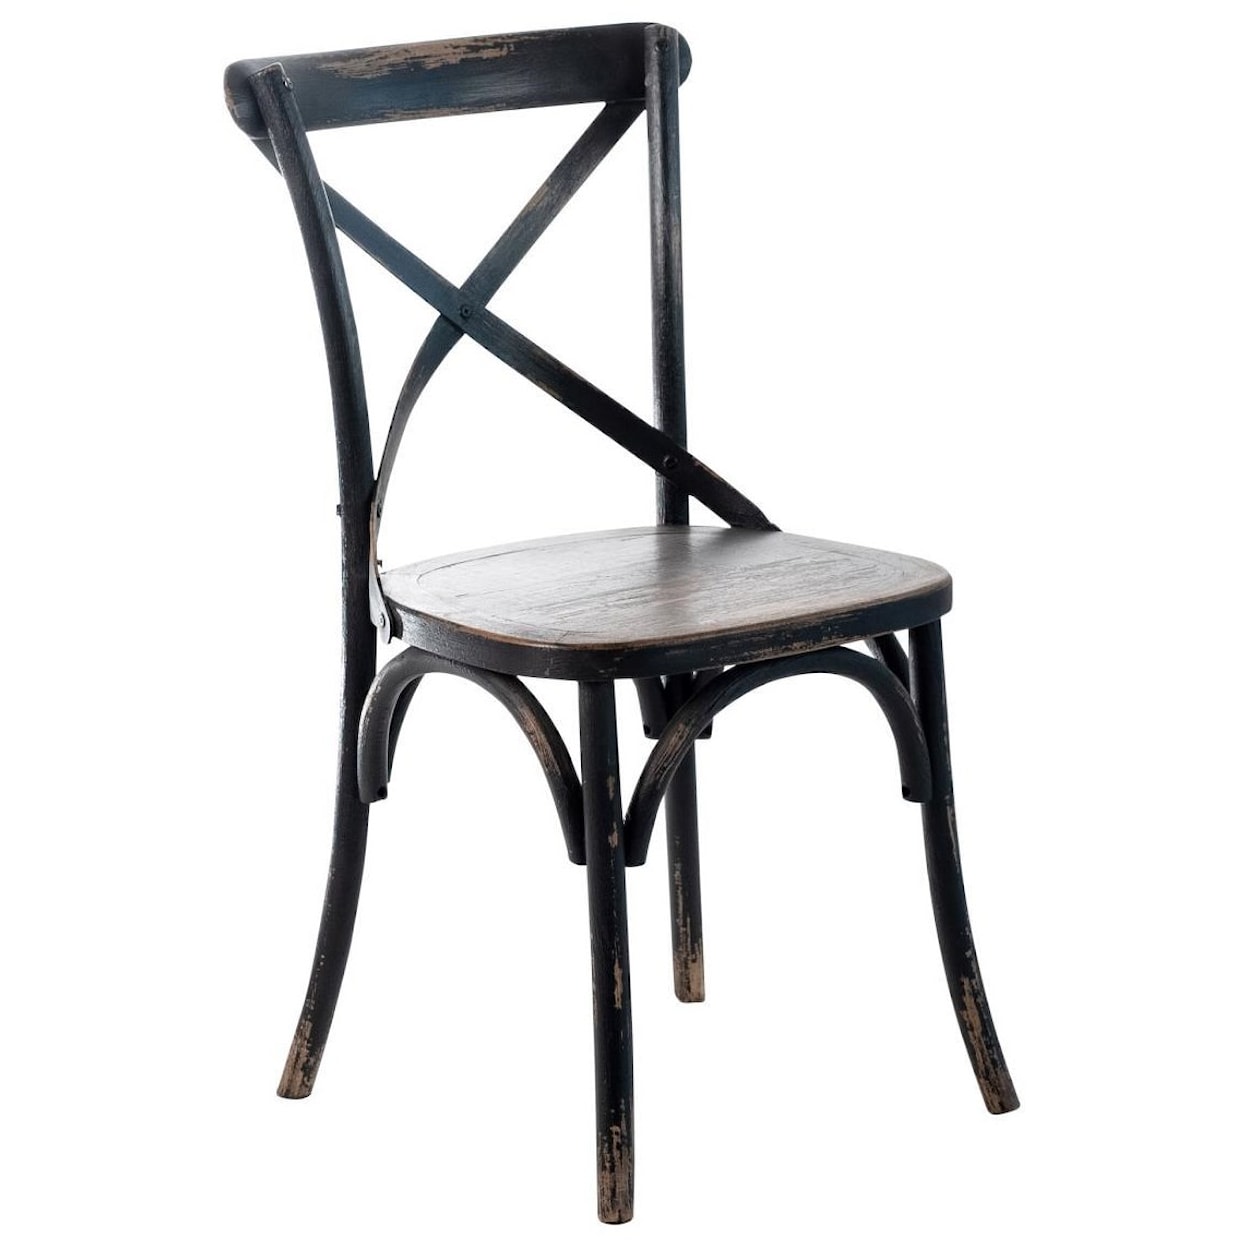 EAGLE INDUSTRIES Redmond Redmond Dining Chair Antique Black